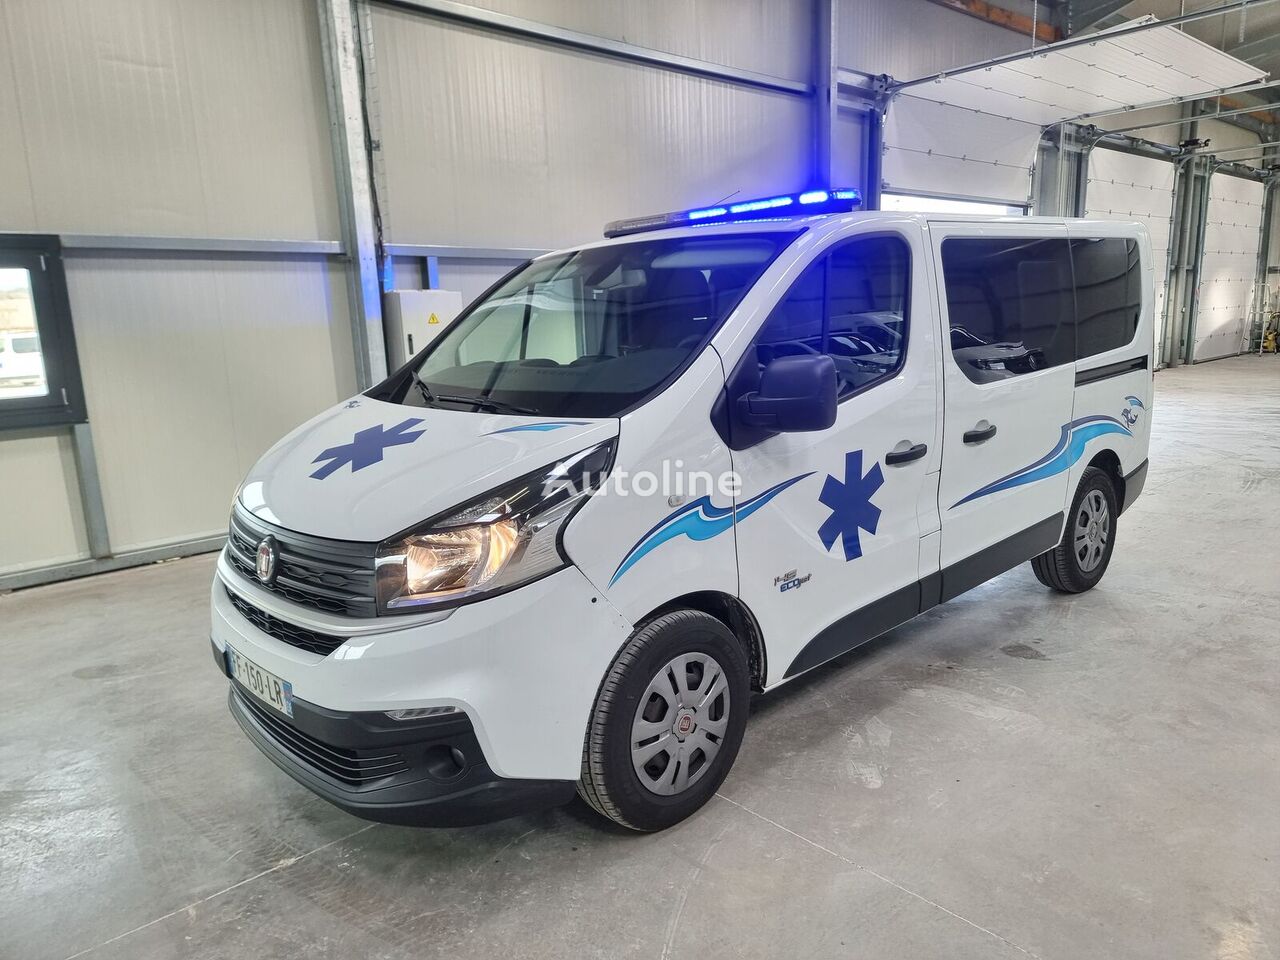 FIAT TALENTO 2019 168 419 KM ambulancia